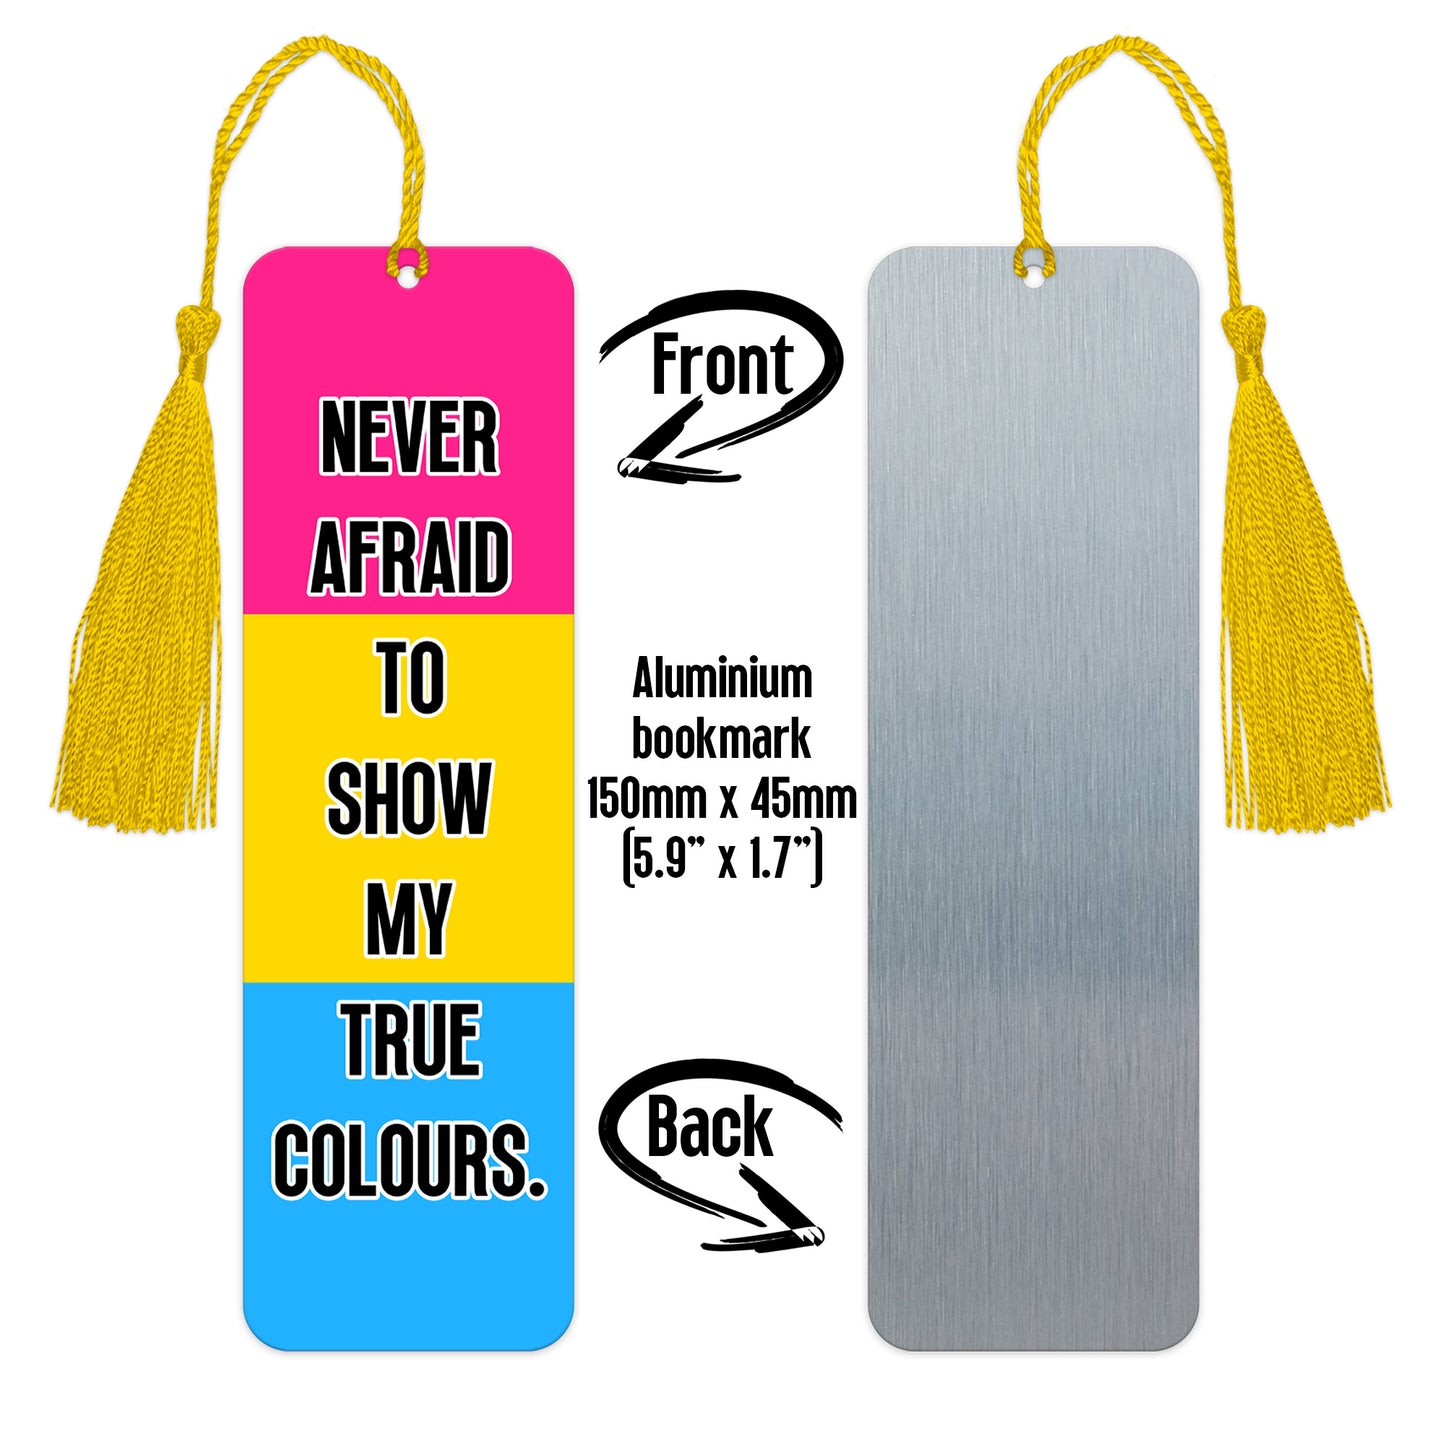 Pansexual pride luxury aluminium bookmark never afraid to show my true colours